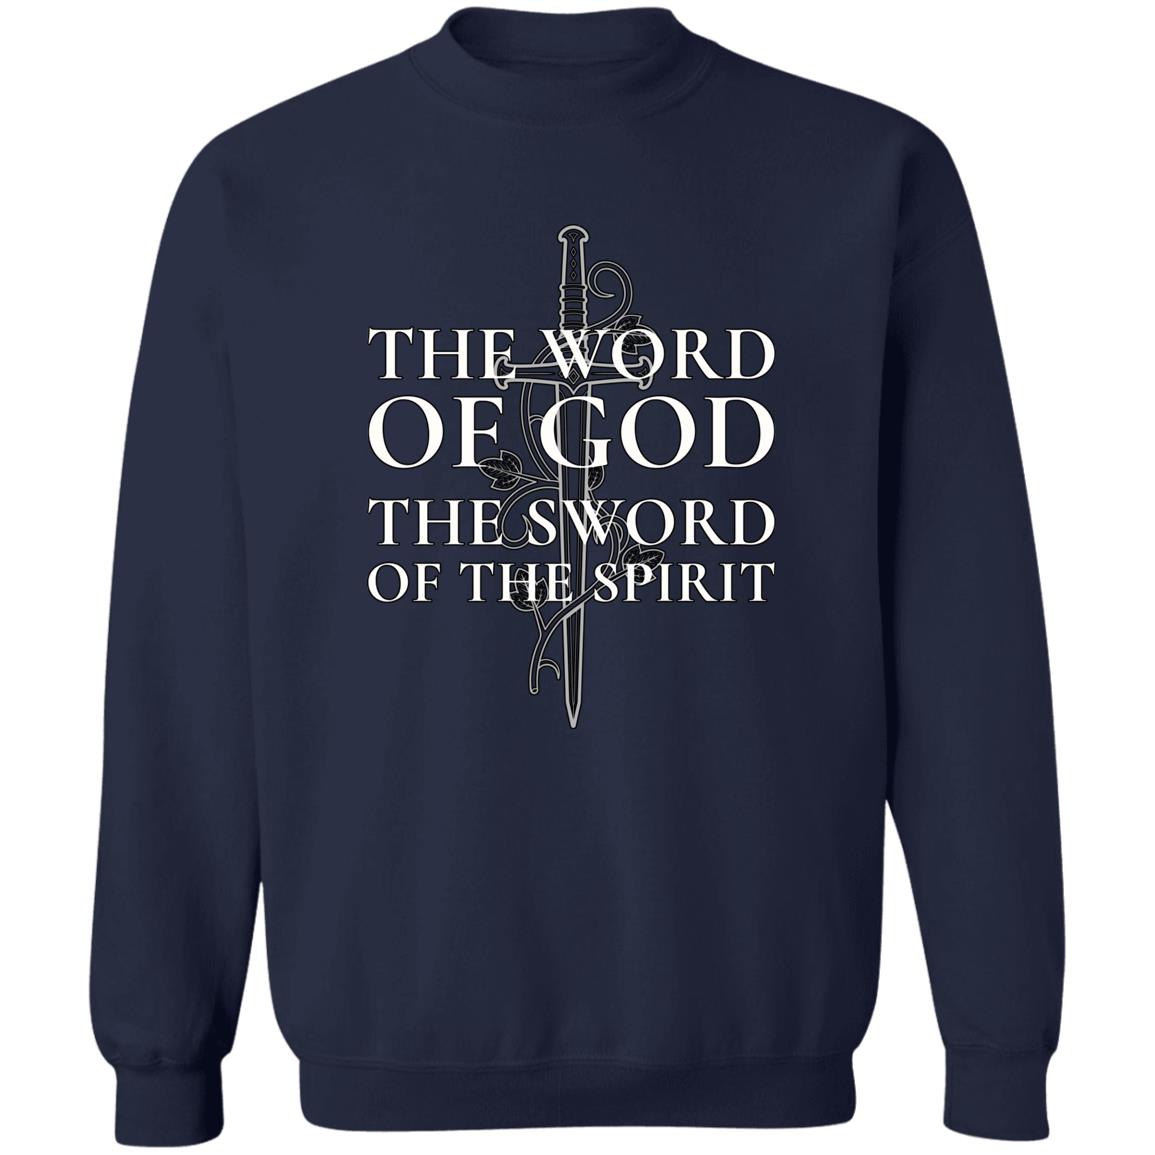 Word of God, Sword of the Spirit (Unisex Sweatshirt)